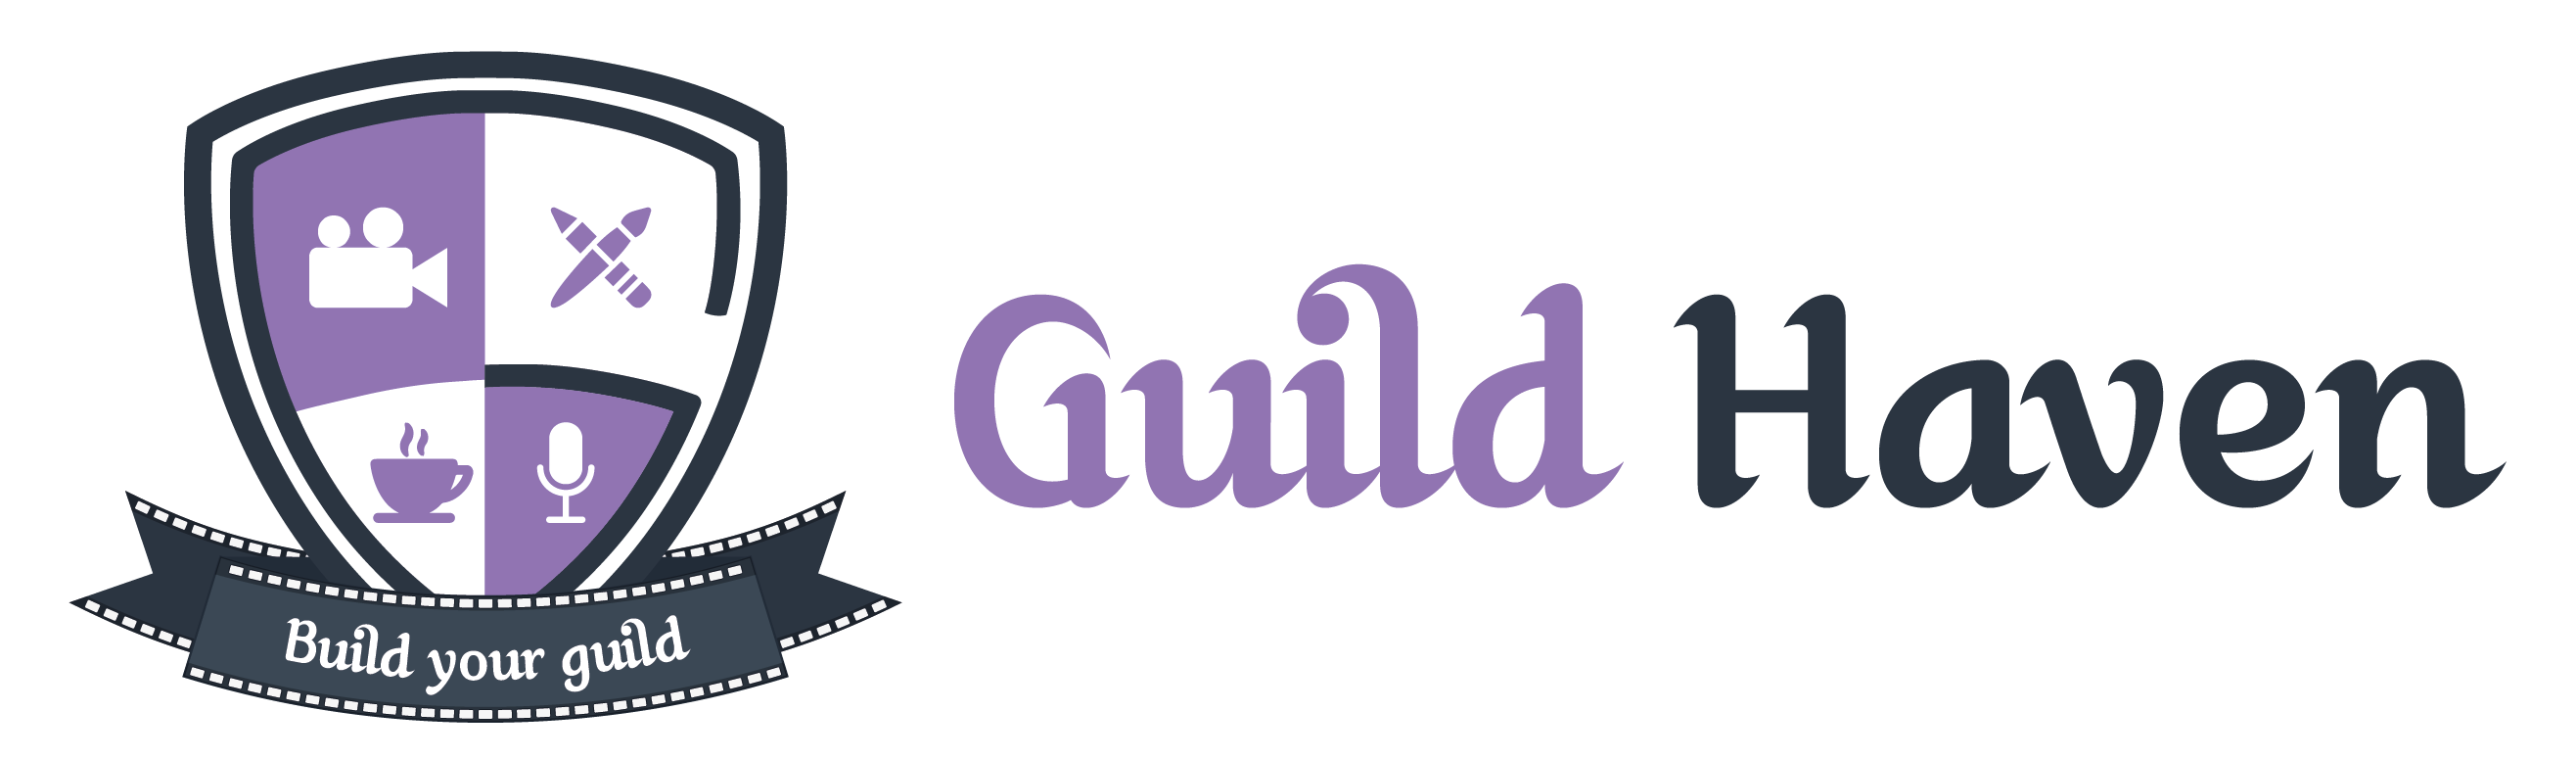 Guild Haven Logotype